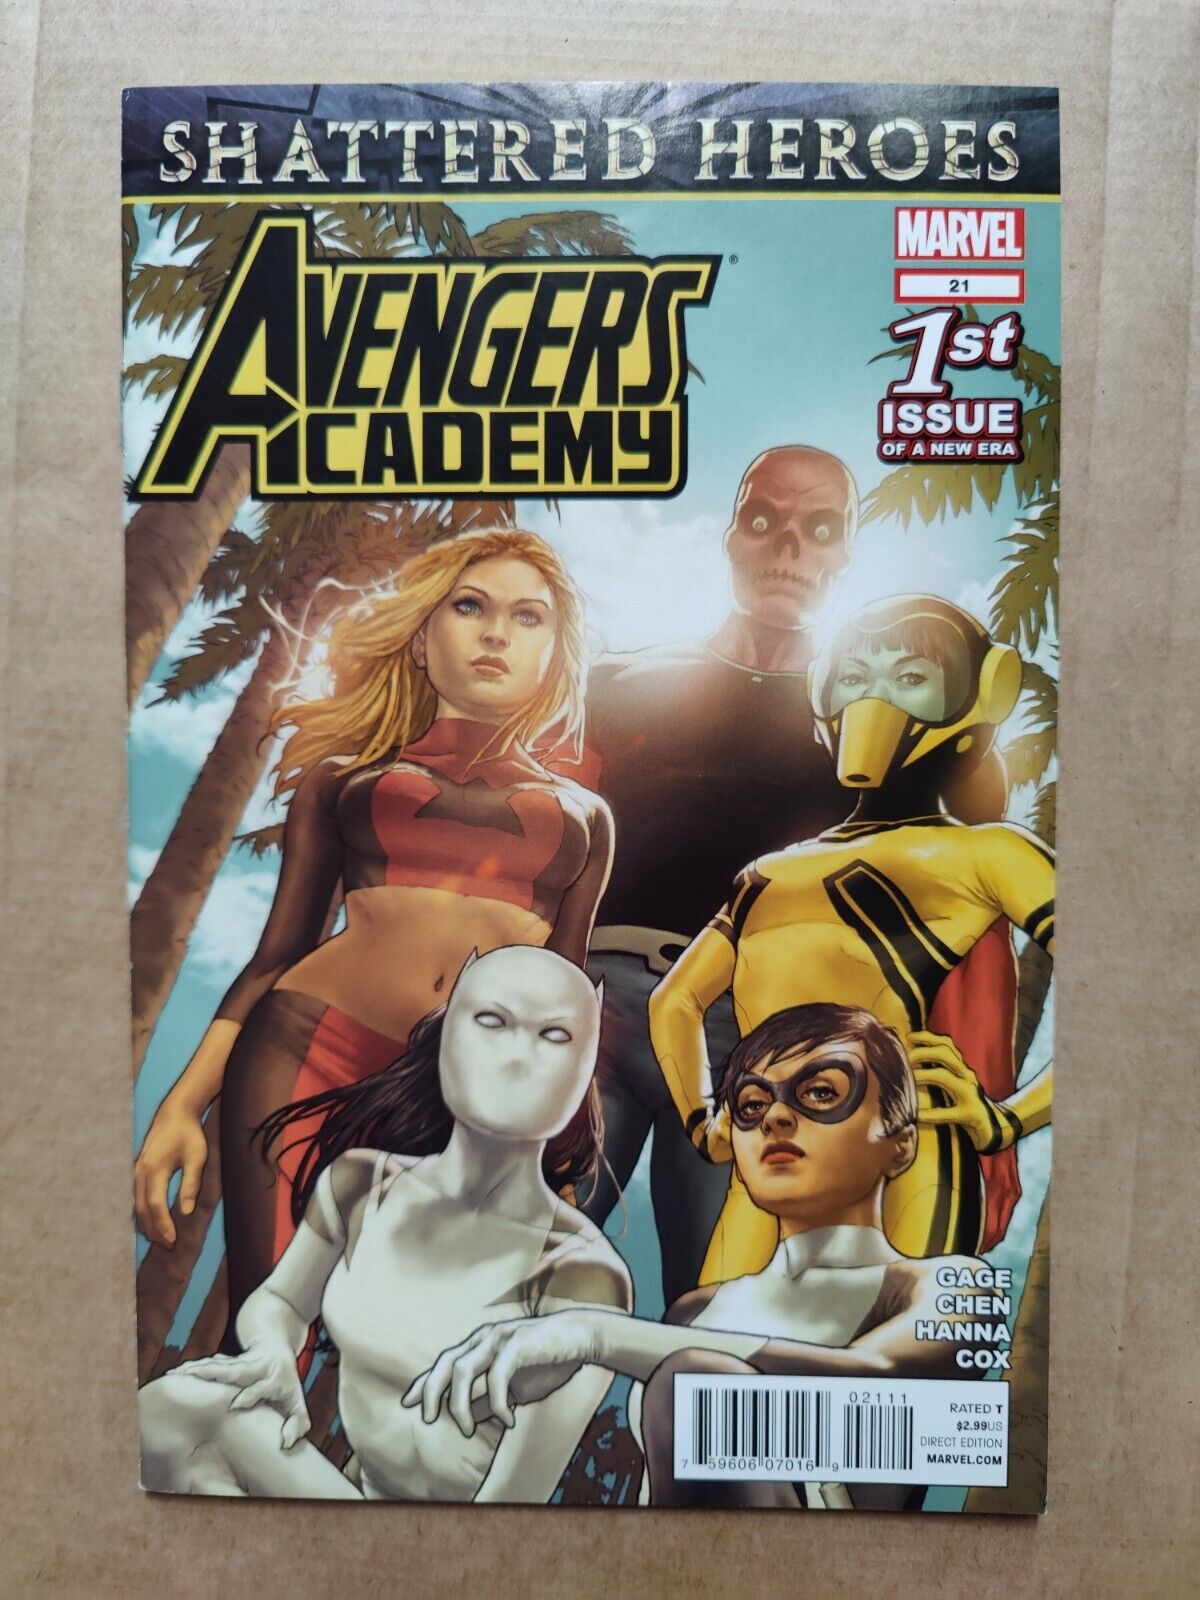  Avengers Academy #21 FN/VF 1st Cover & App White Tiger Ava Ayala 2012